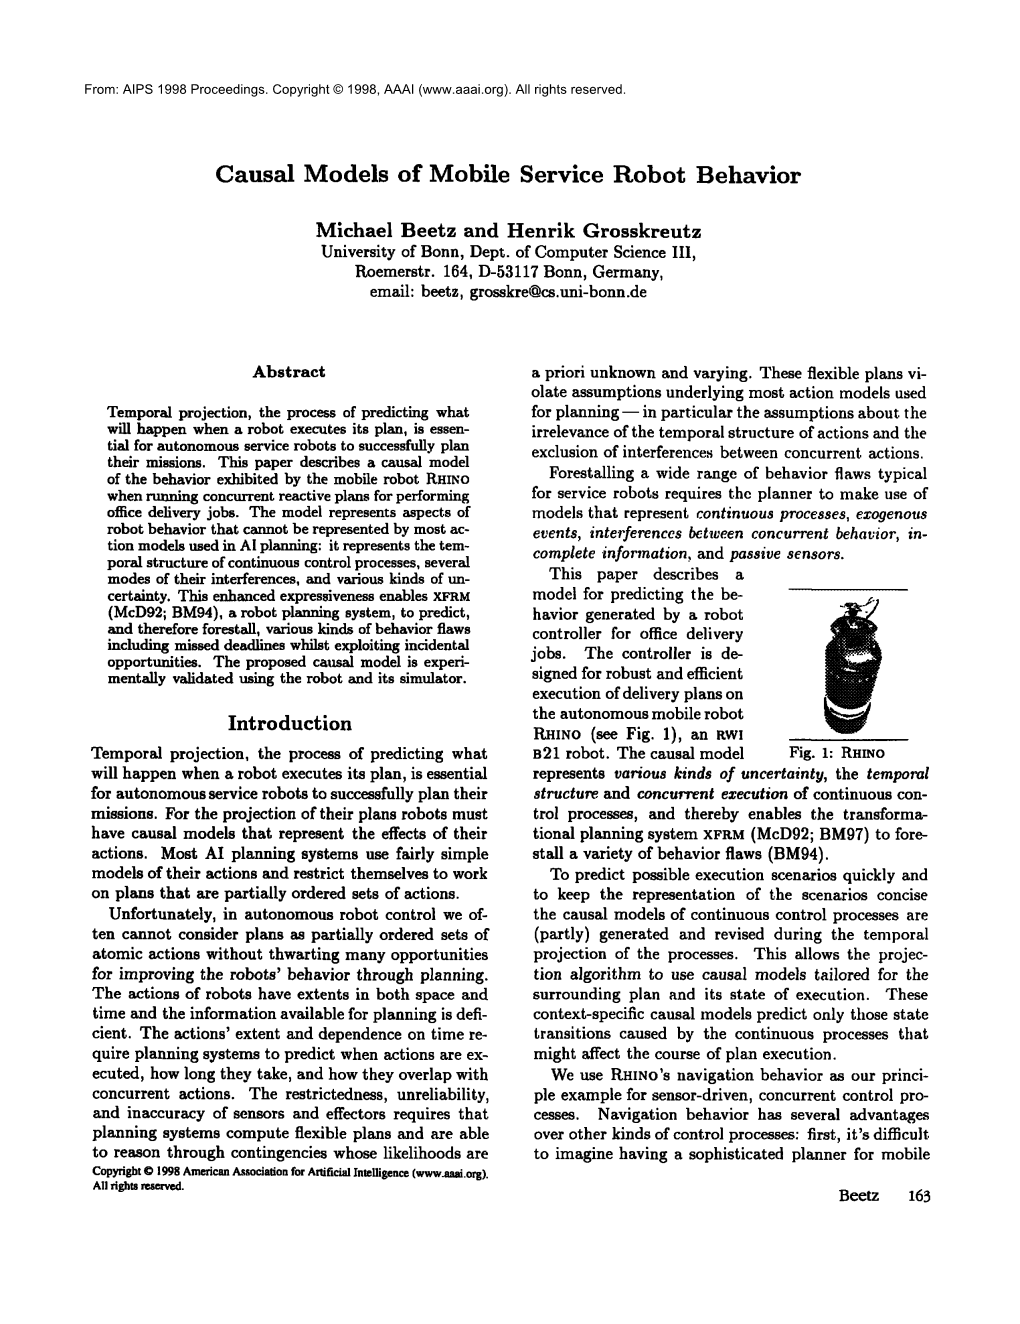 Causal Models of Mobile Service Robot Behavior